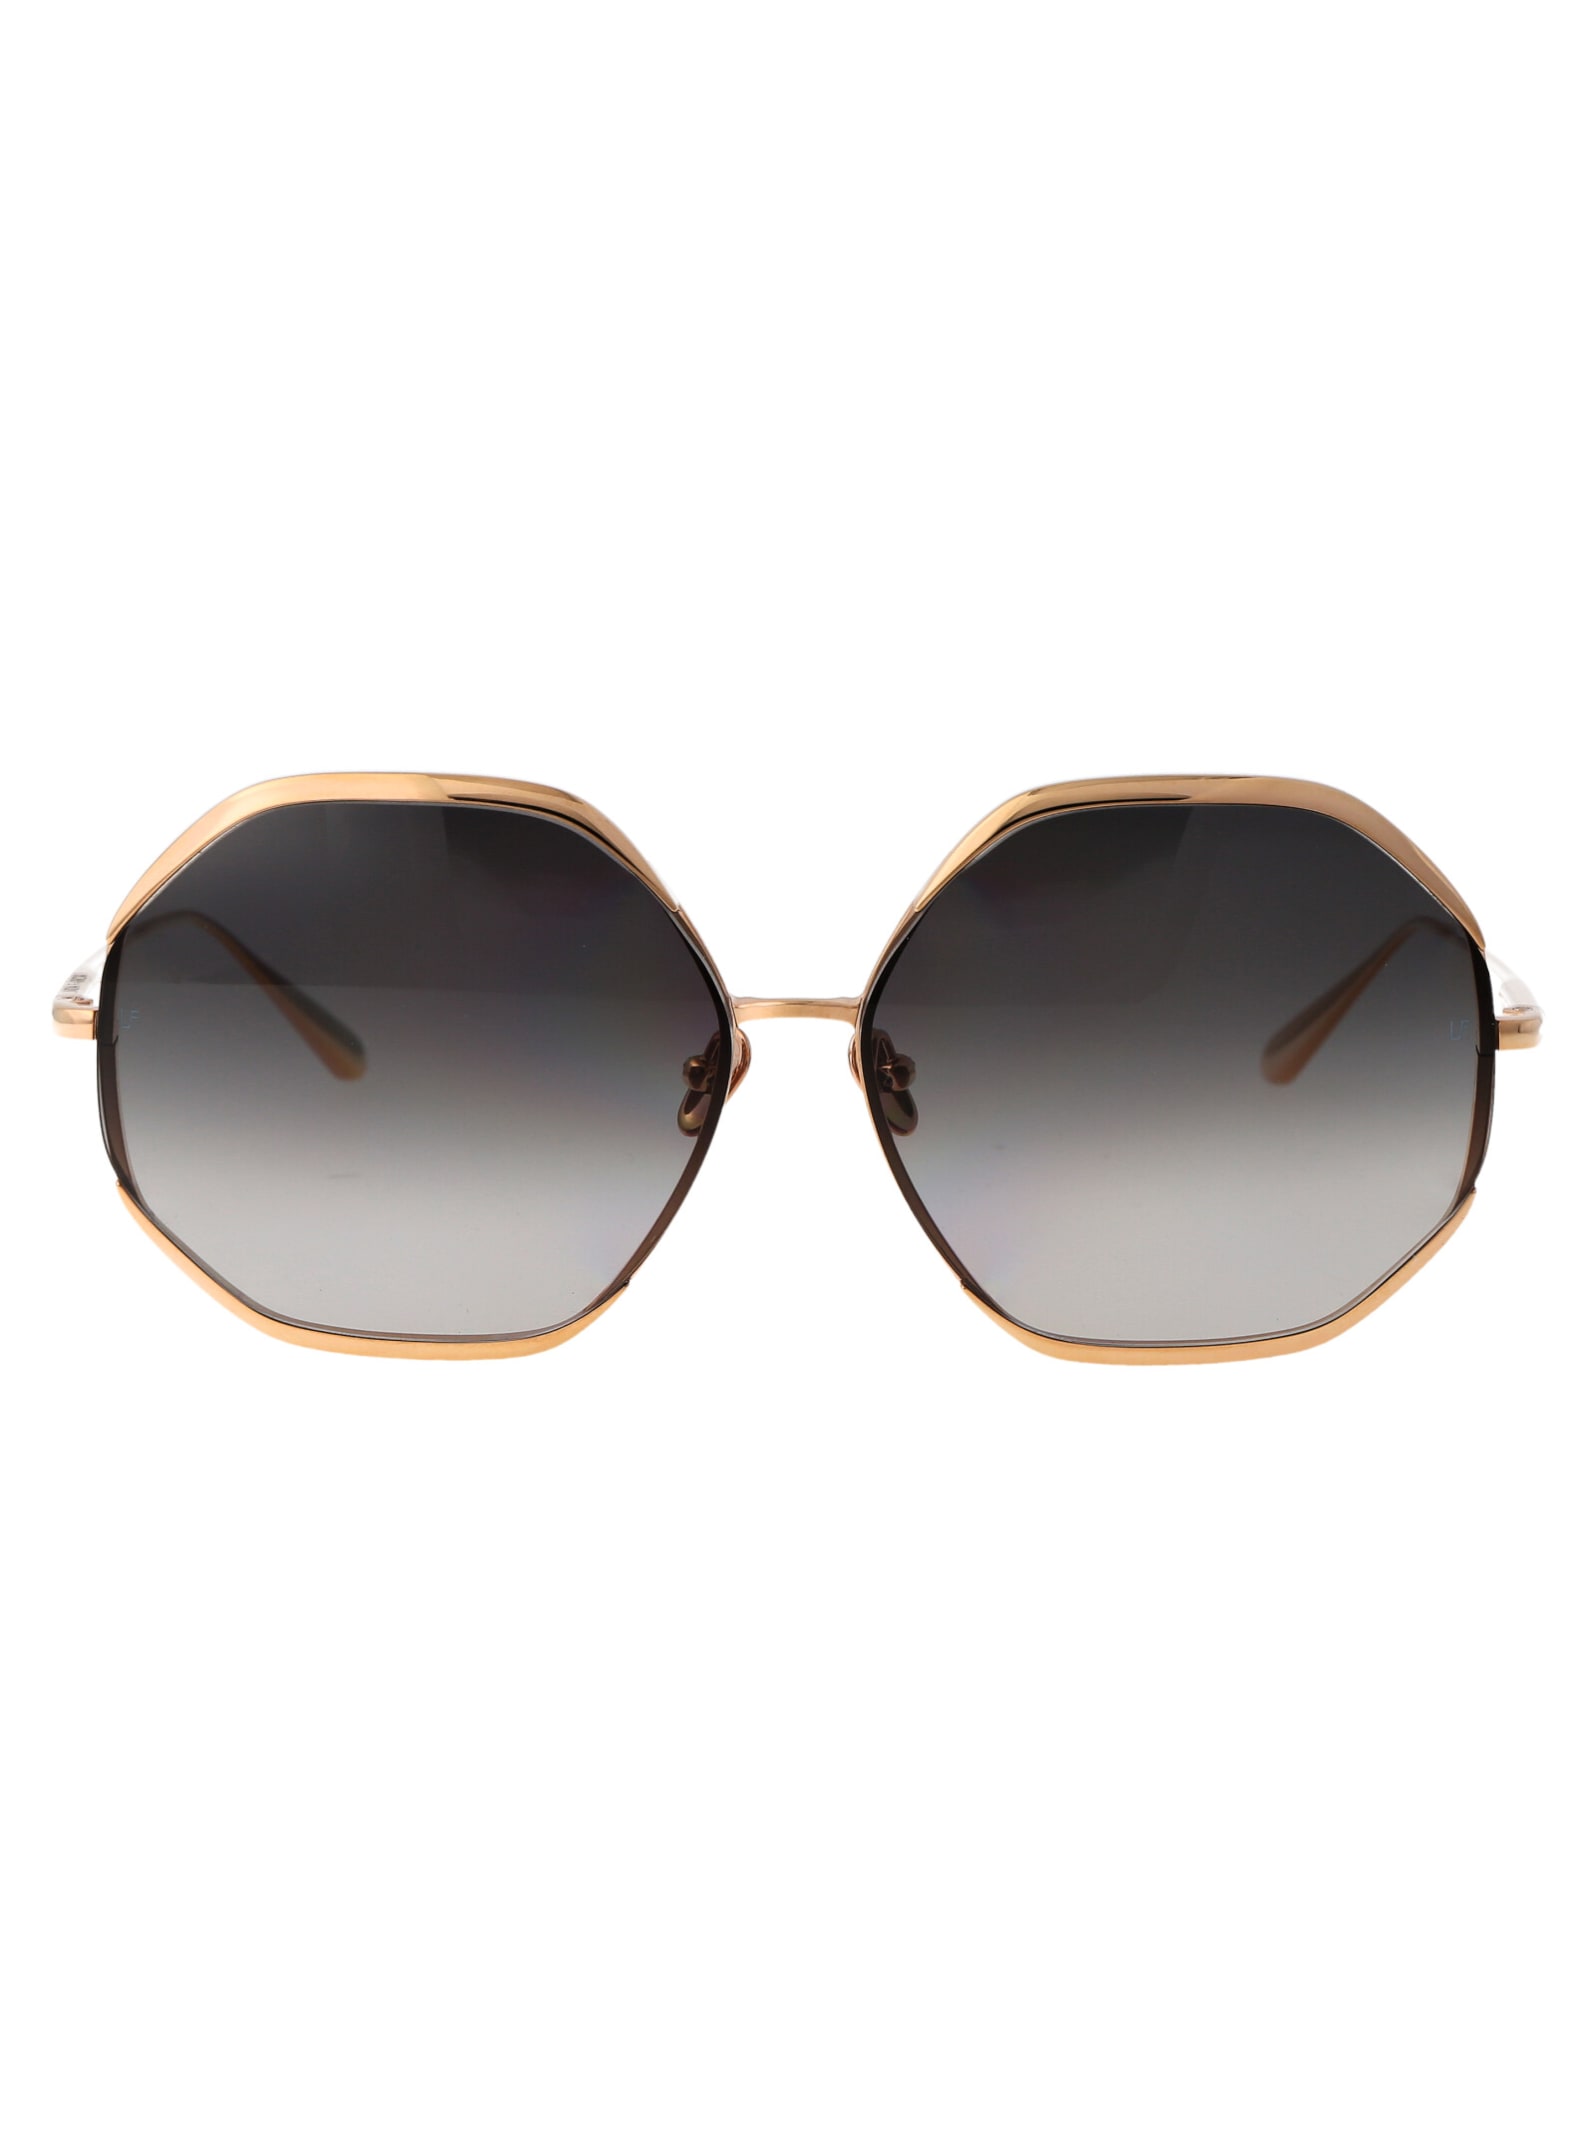 Linda Farrow Sunglasses In Rosegold/greygrad